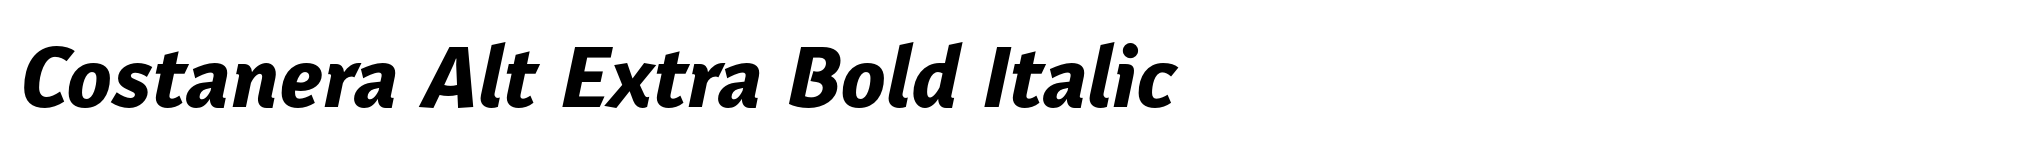 Costanera Alt Extra Bold Italic image